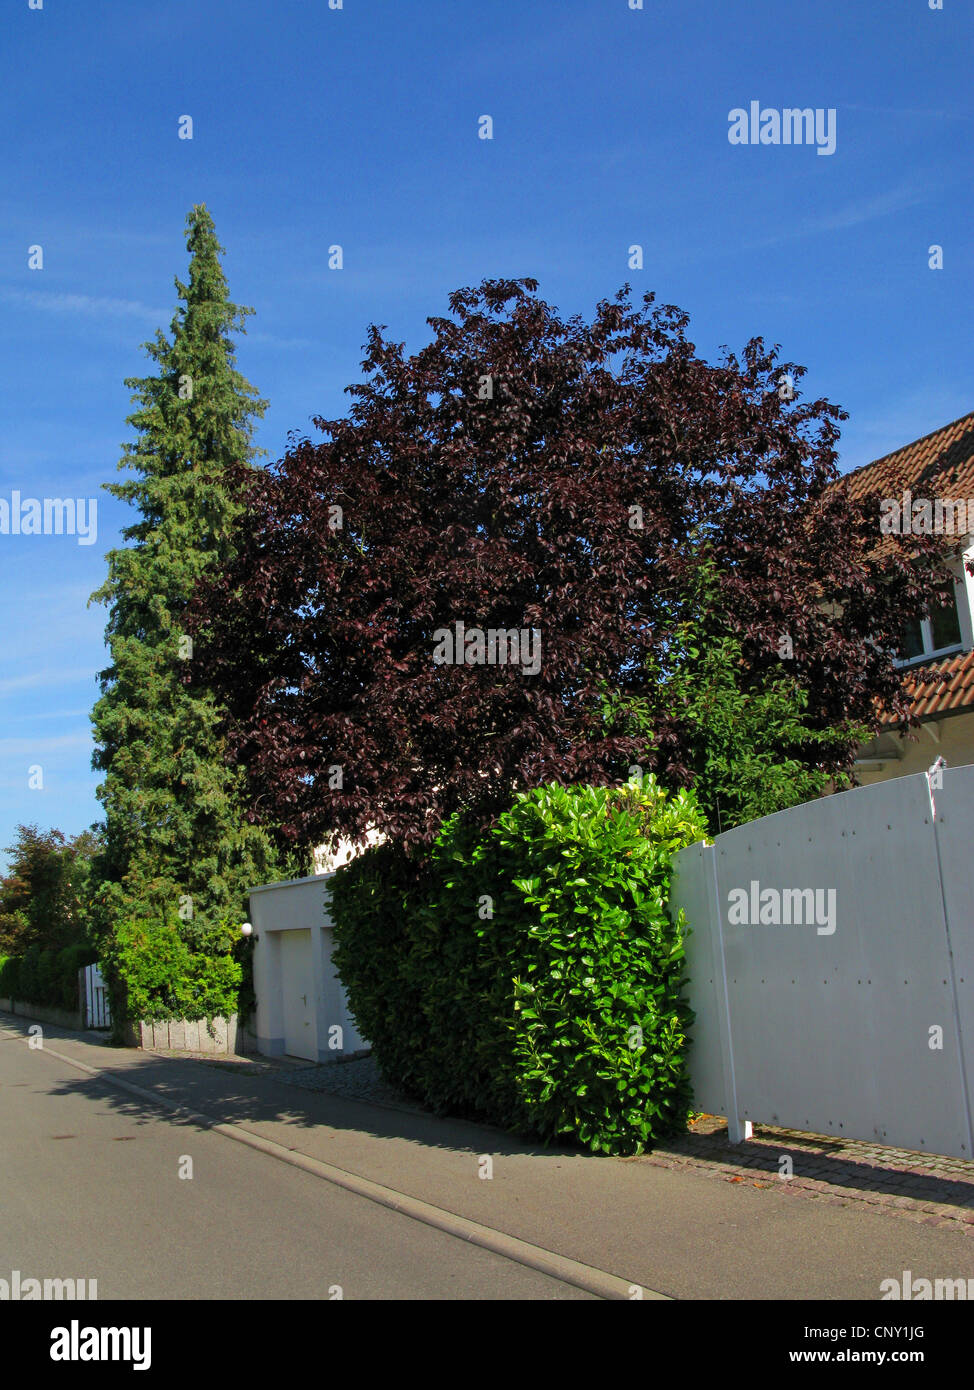 cherry plum, Myrobalan plum (Prunus cerasifera 'Nigra', Prunus cerasifera Nigra), at street border in summer with Chamaecyparis, Germany Stock Photo